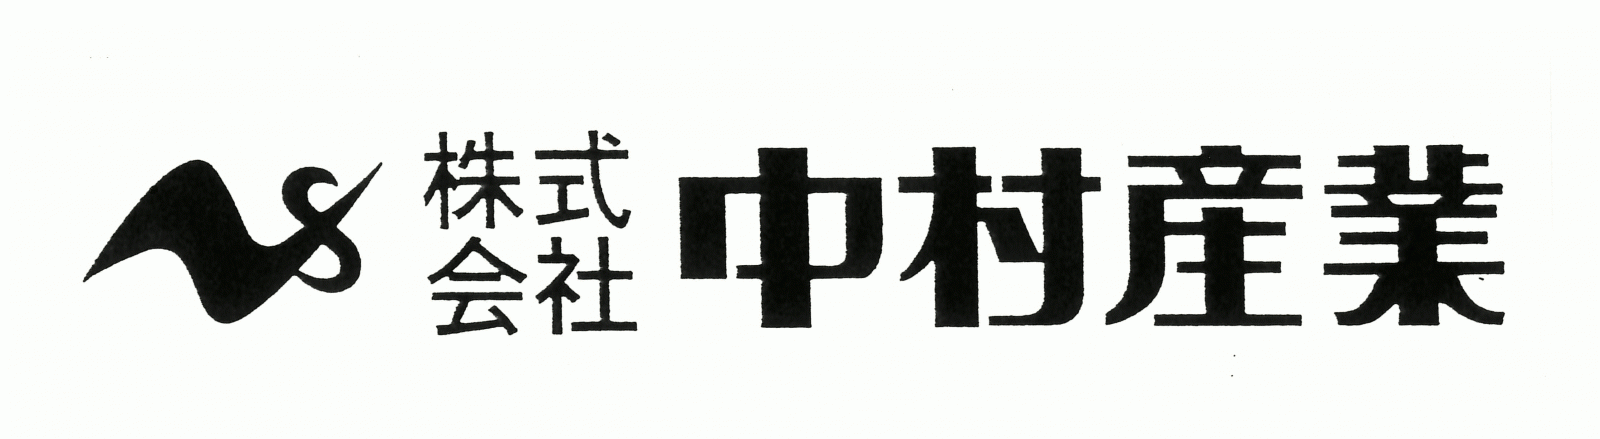 ロゴ:株式会社中村産業